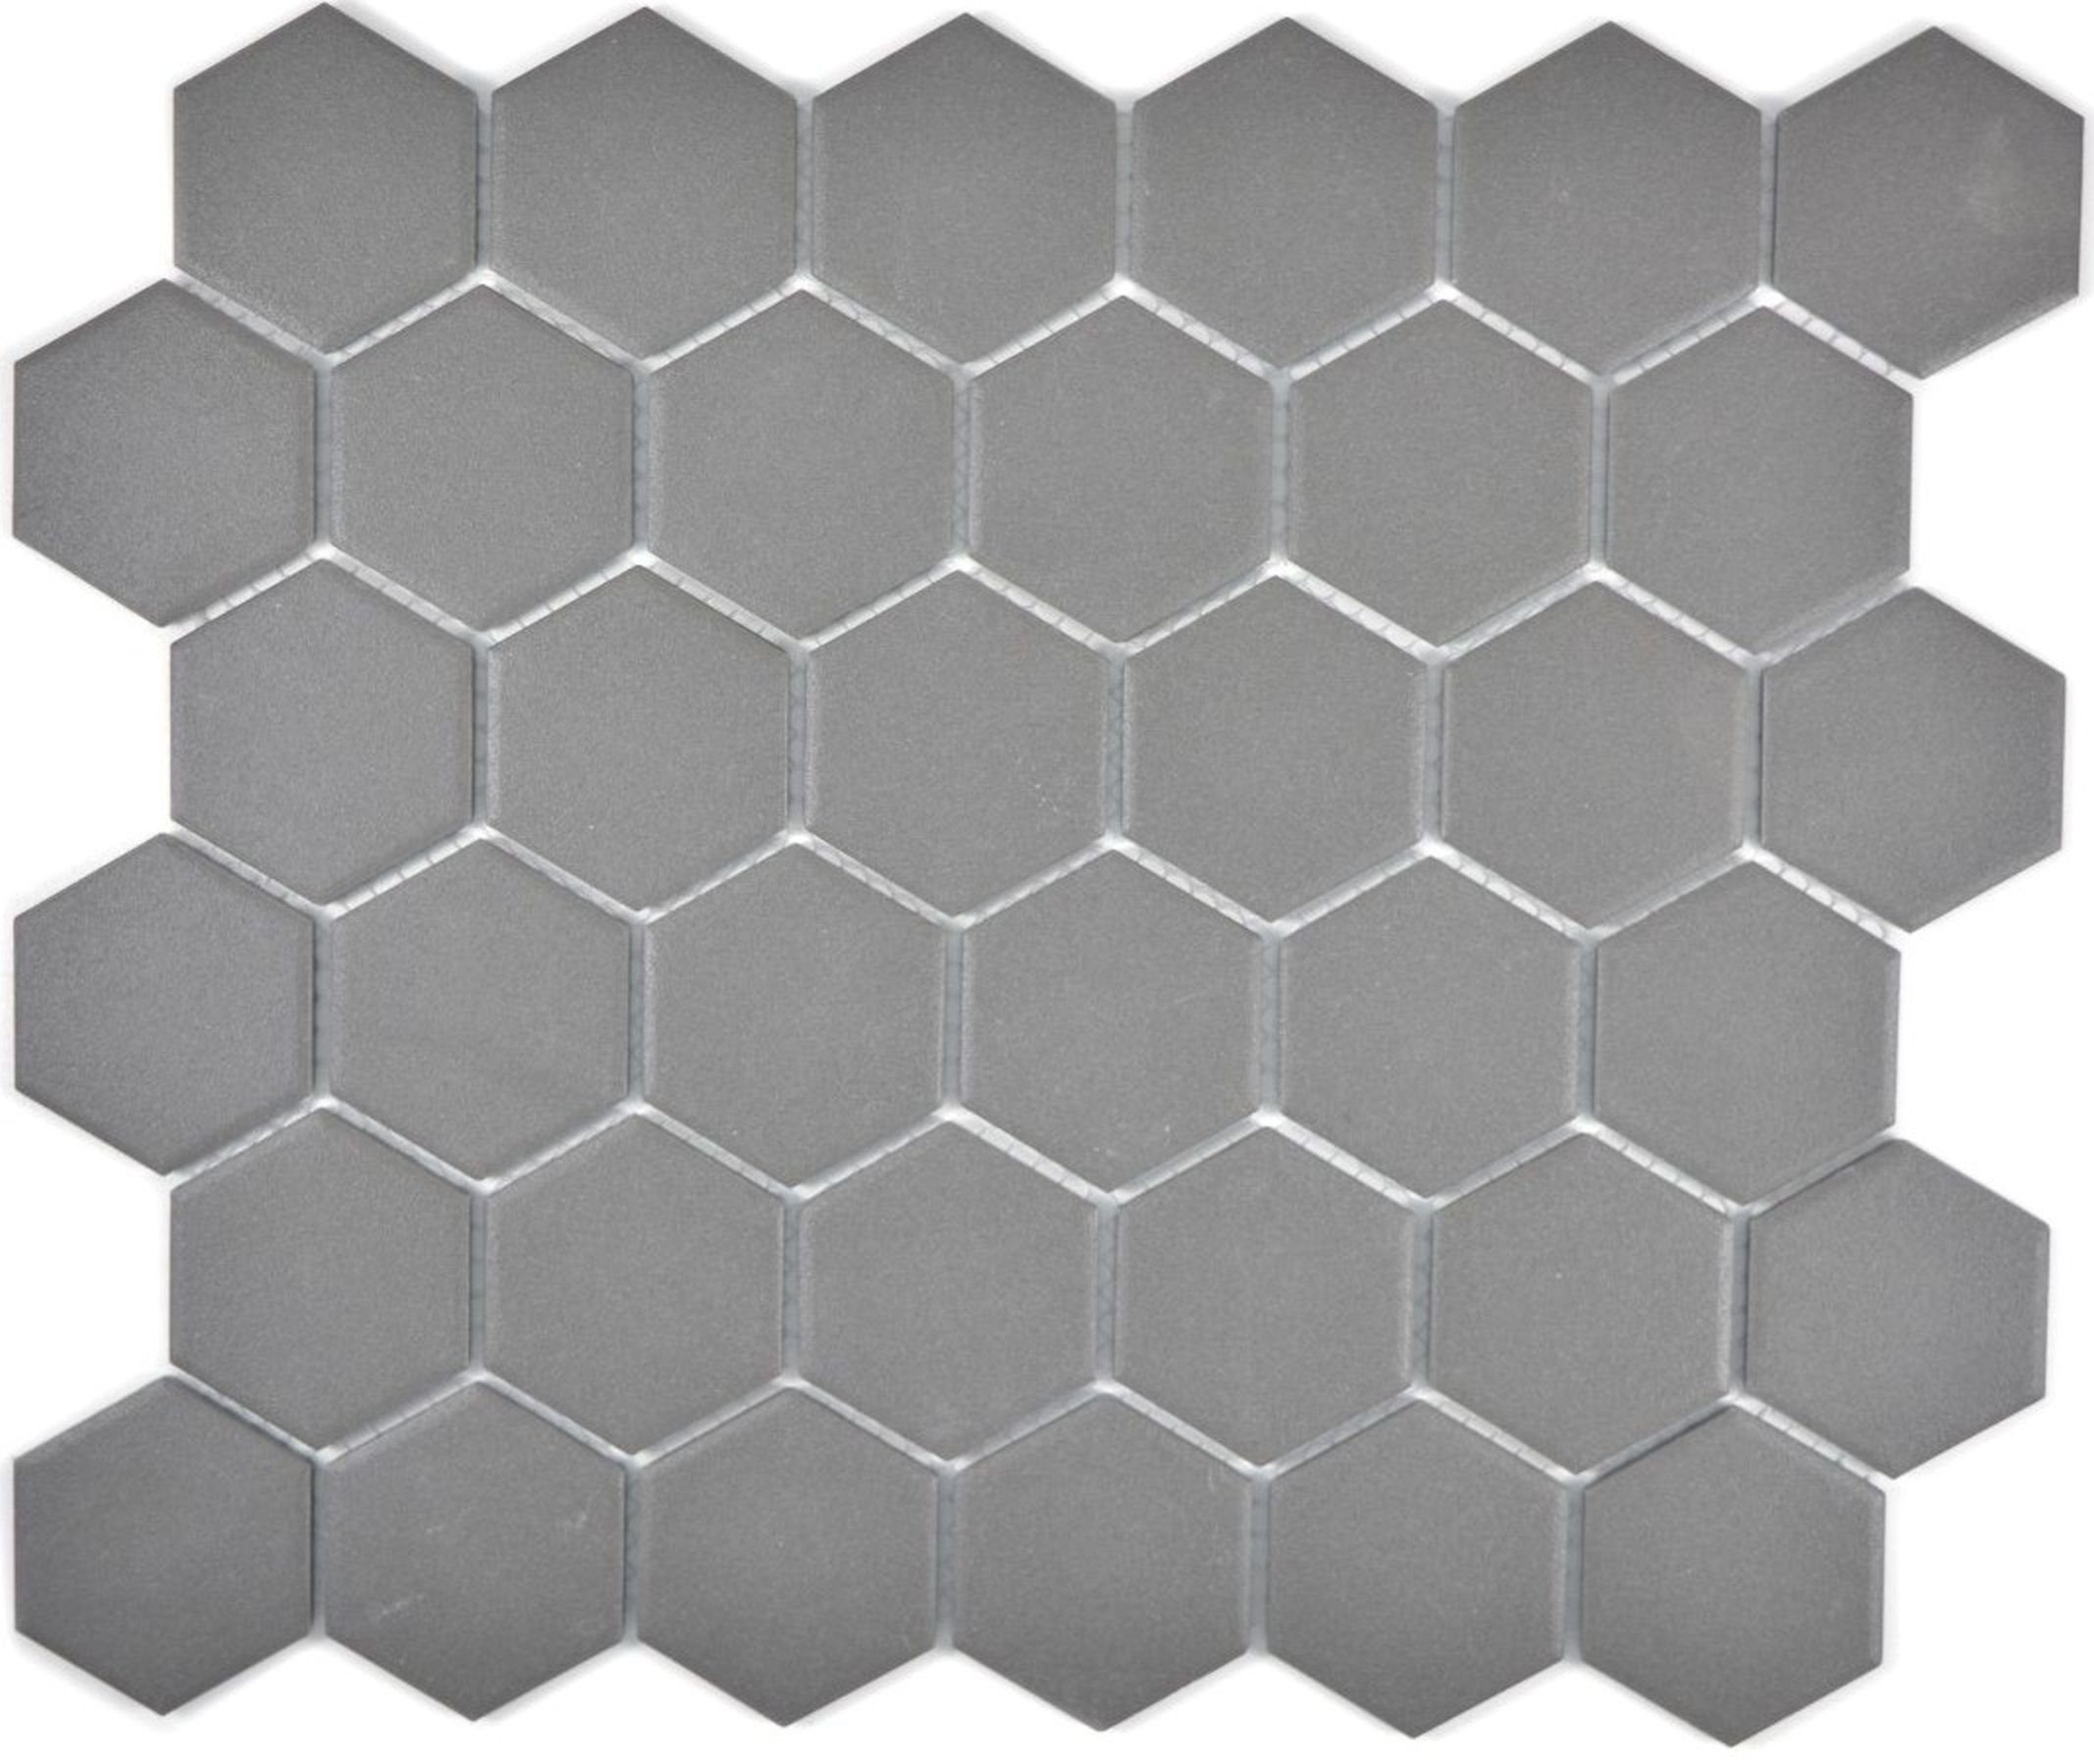 Hexagonale unglasiert Sechseck Mosaik dunkelgrau Mosani Fliese Bodenfliese Keramik